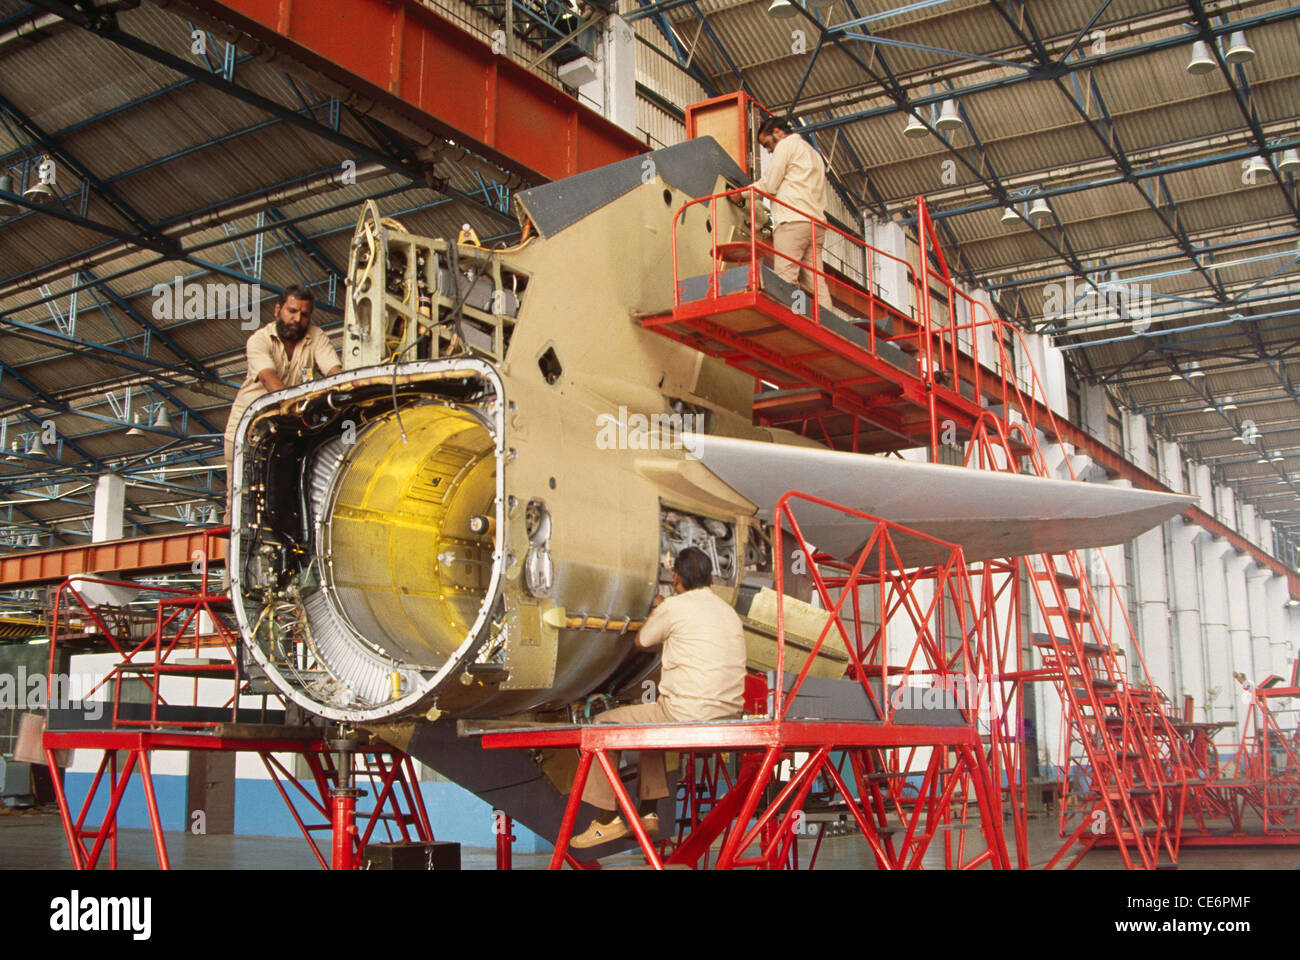 Aeroplane manufacturing factory India Stock Photo